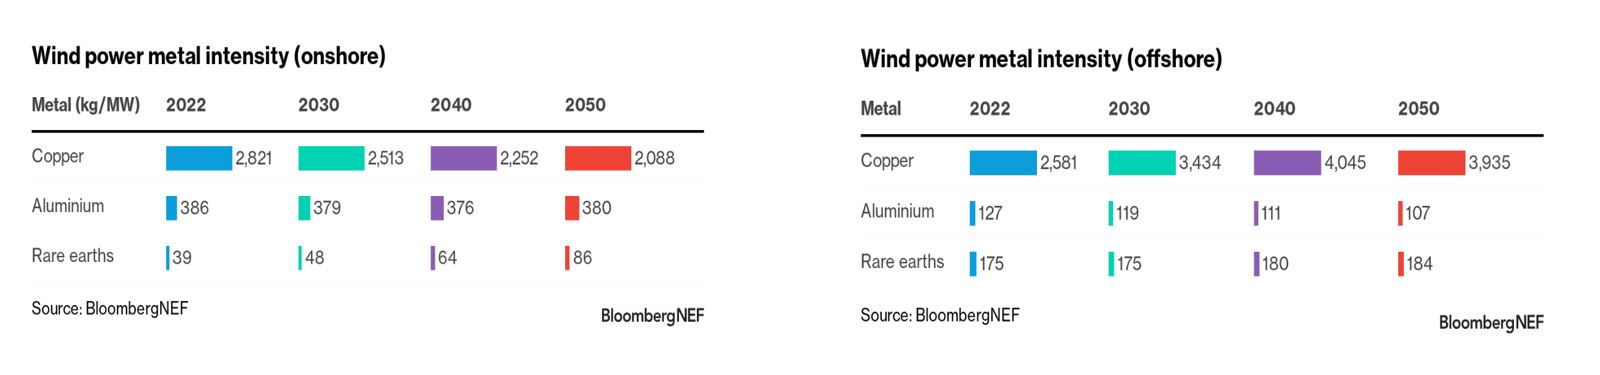 Wind power metal intensity